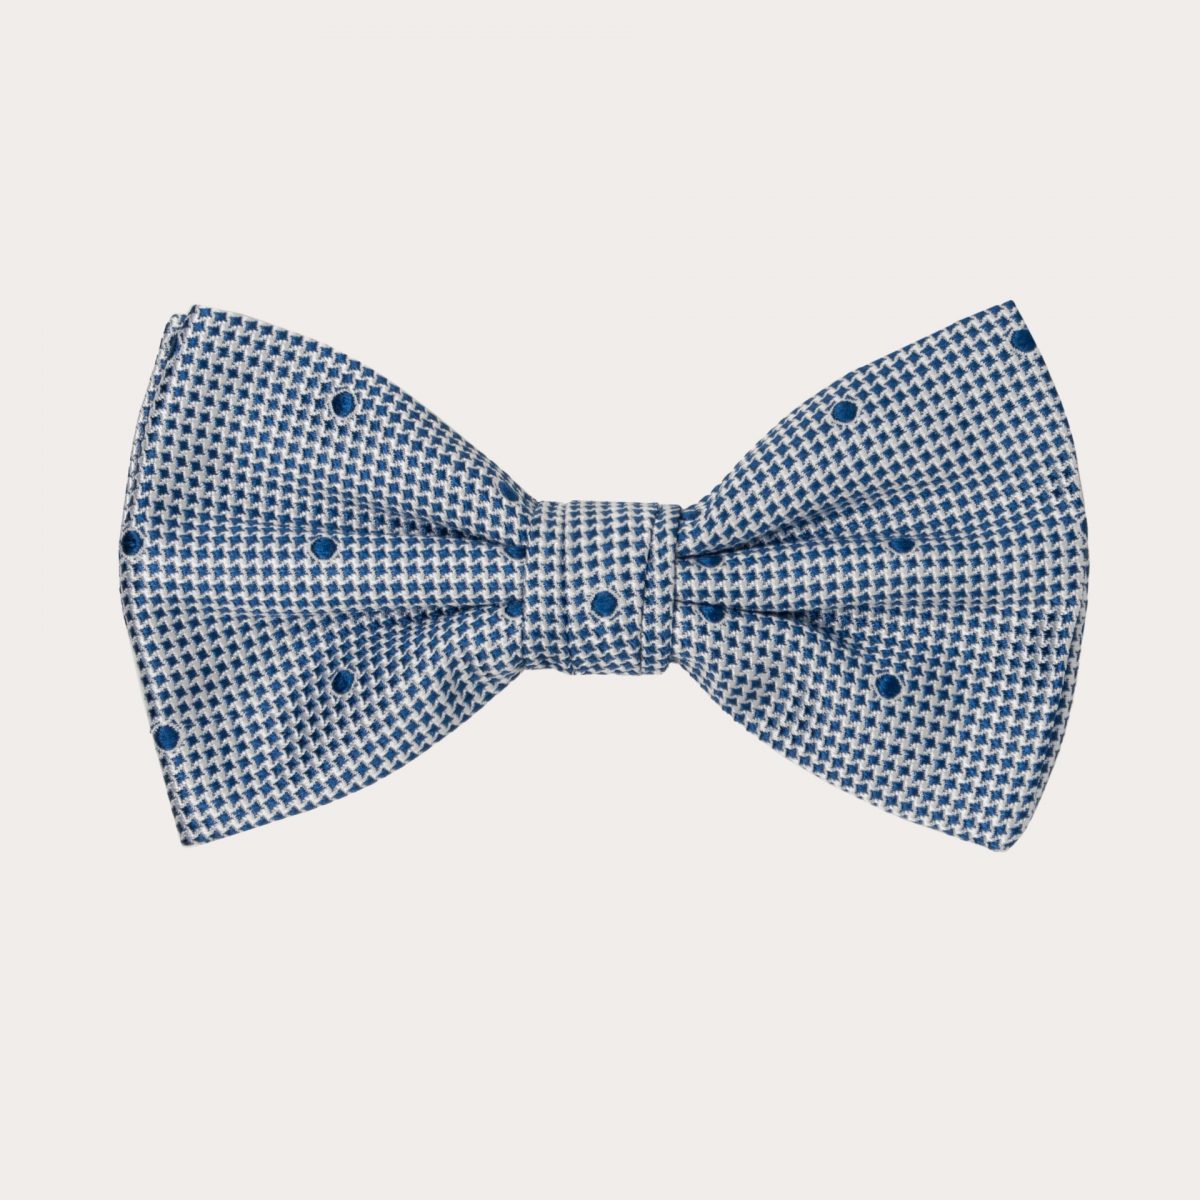 Silk pre-tied bow tie, blue dot and pied de poule